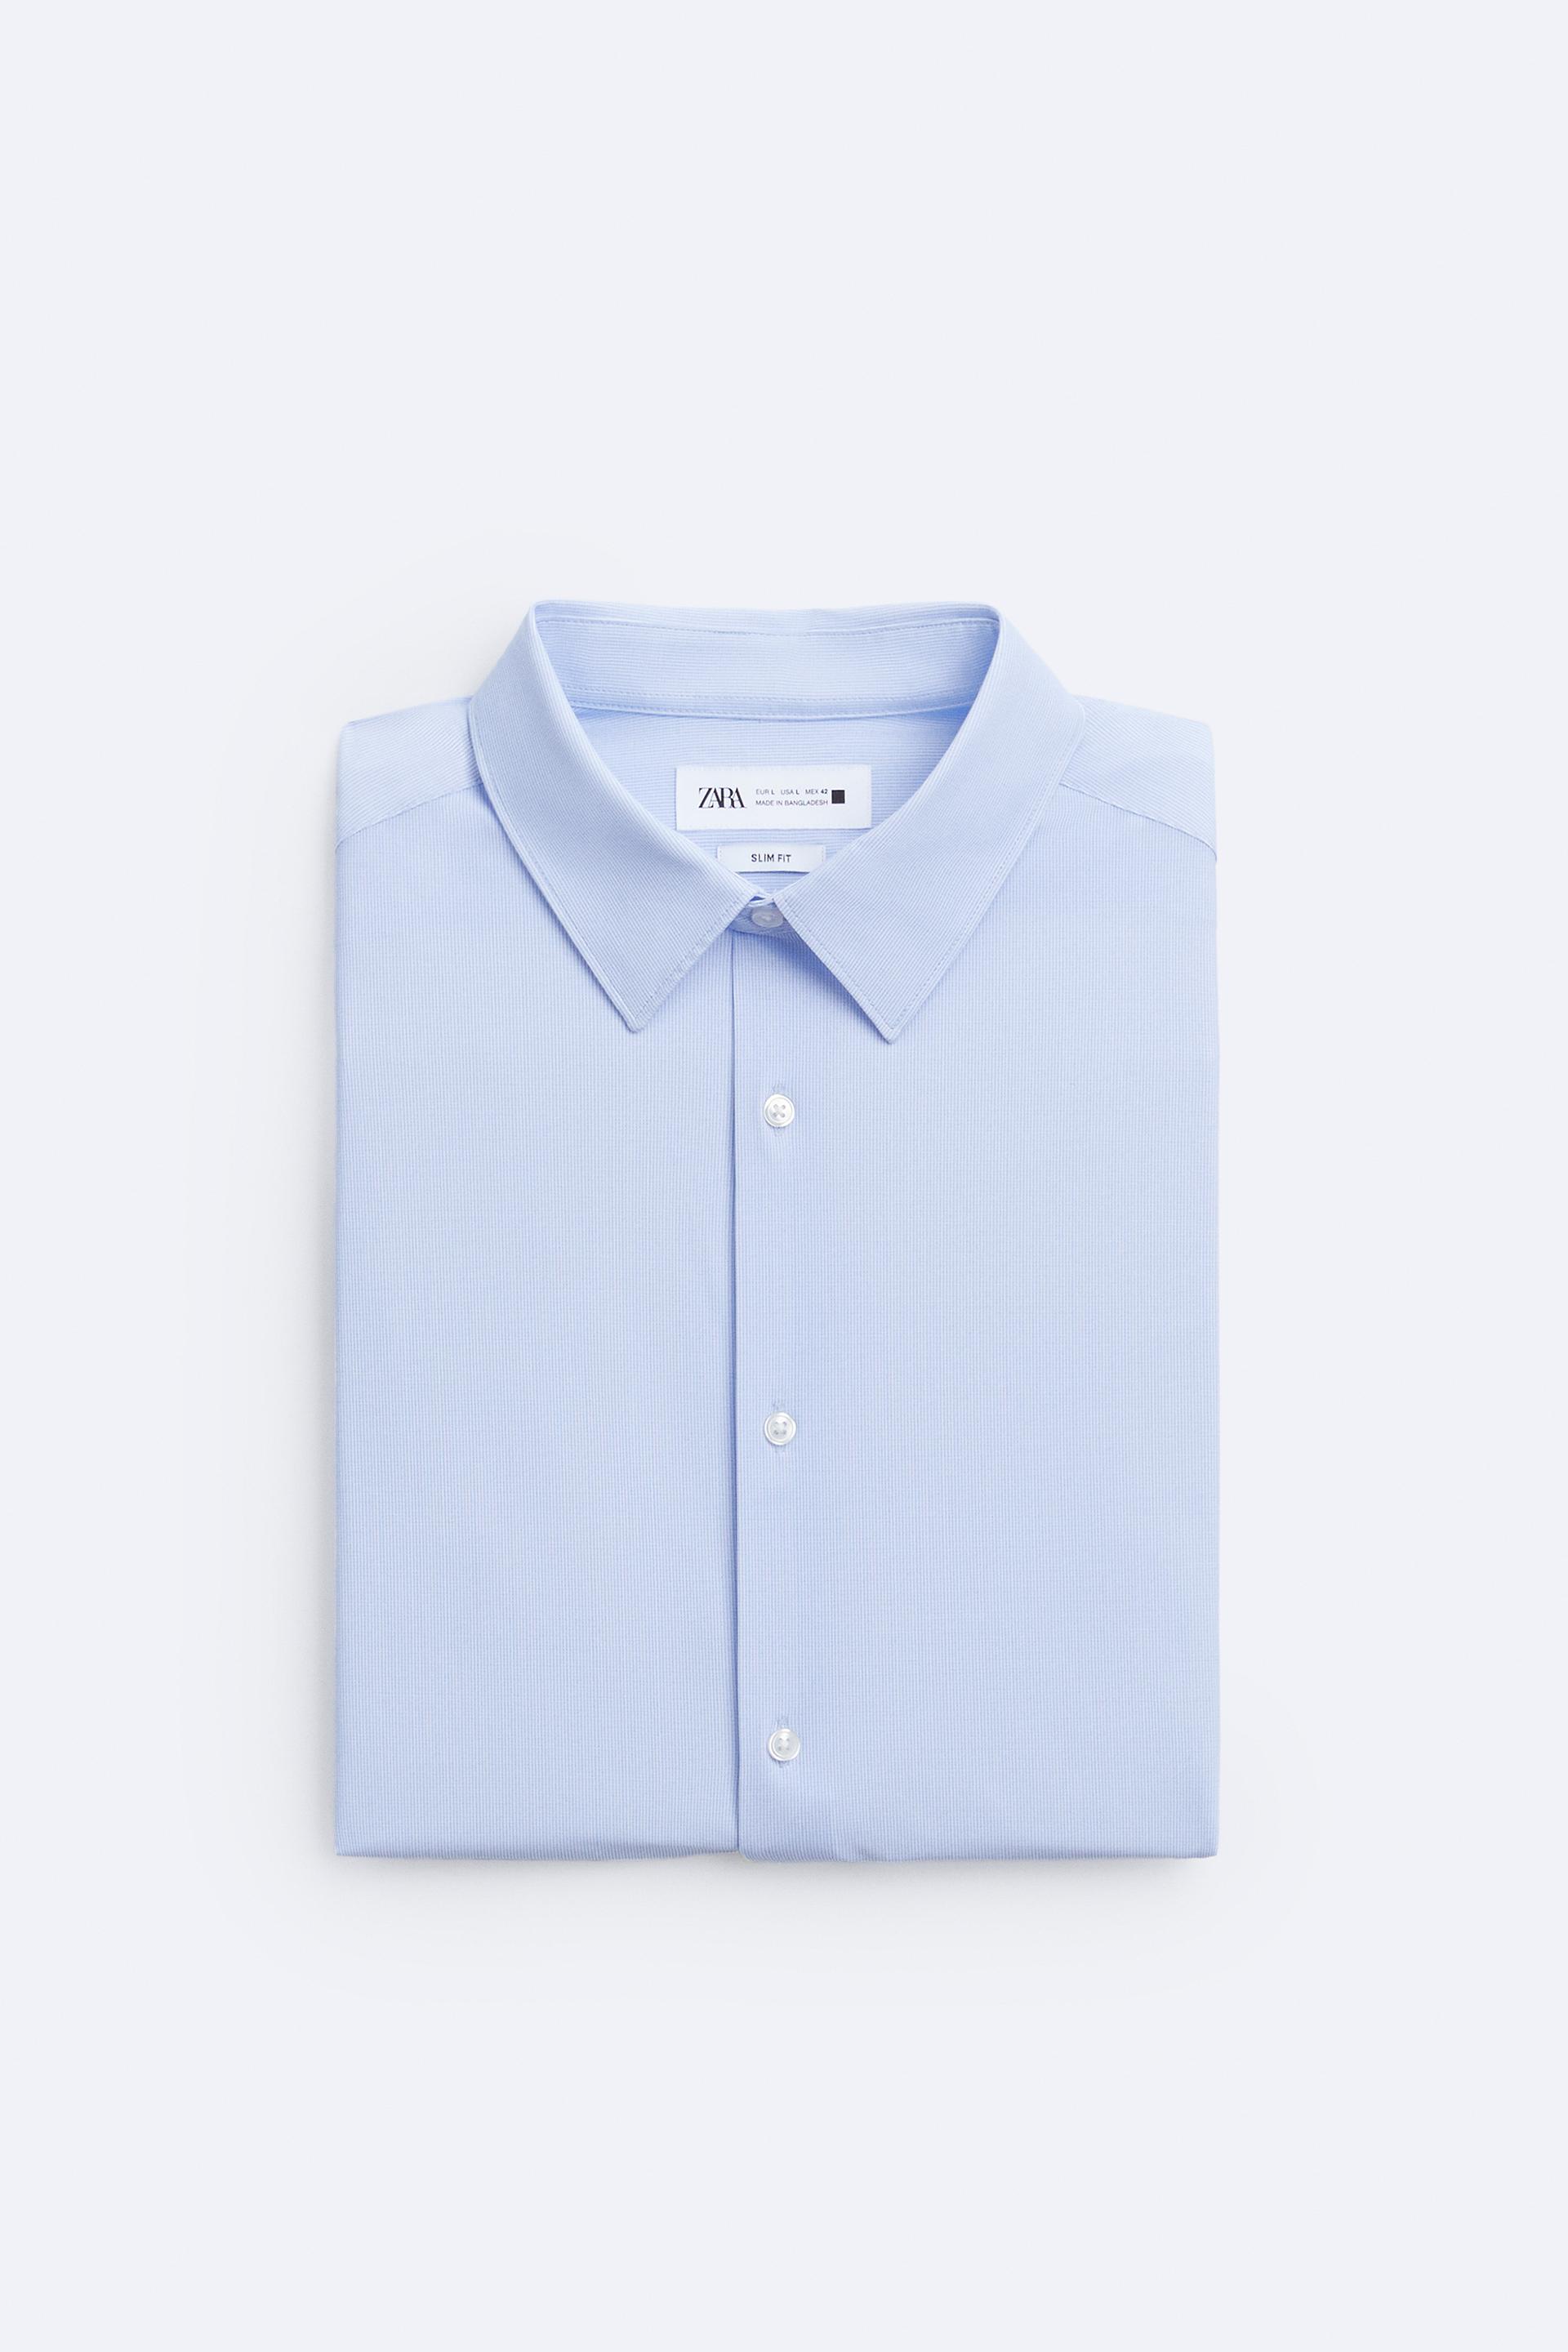 Zara Man Lycra Shirts Full Sleeves (L, Sky Blue) 